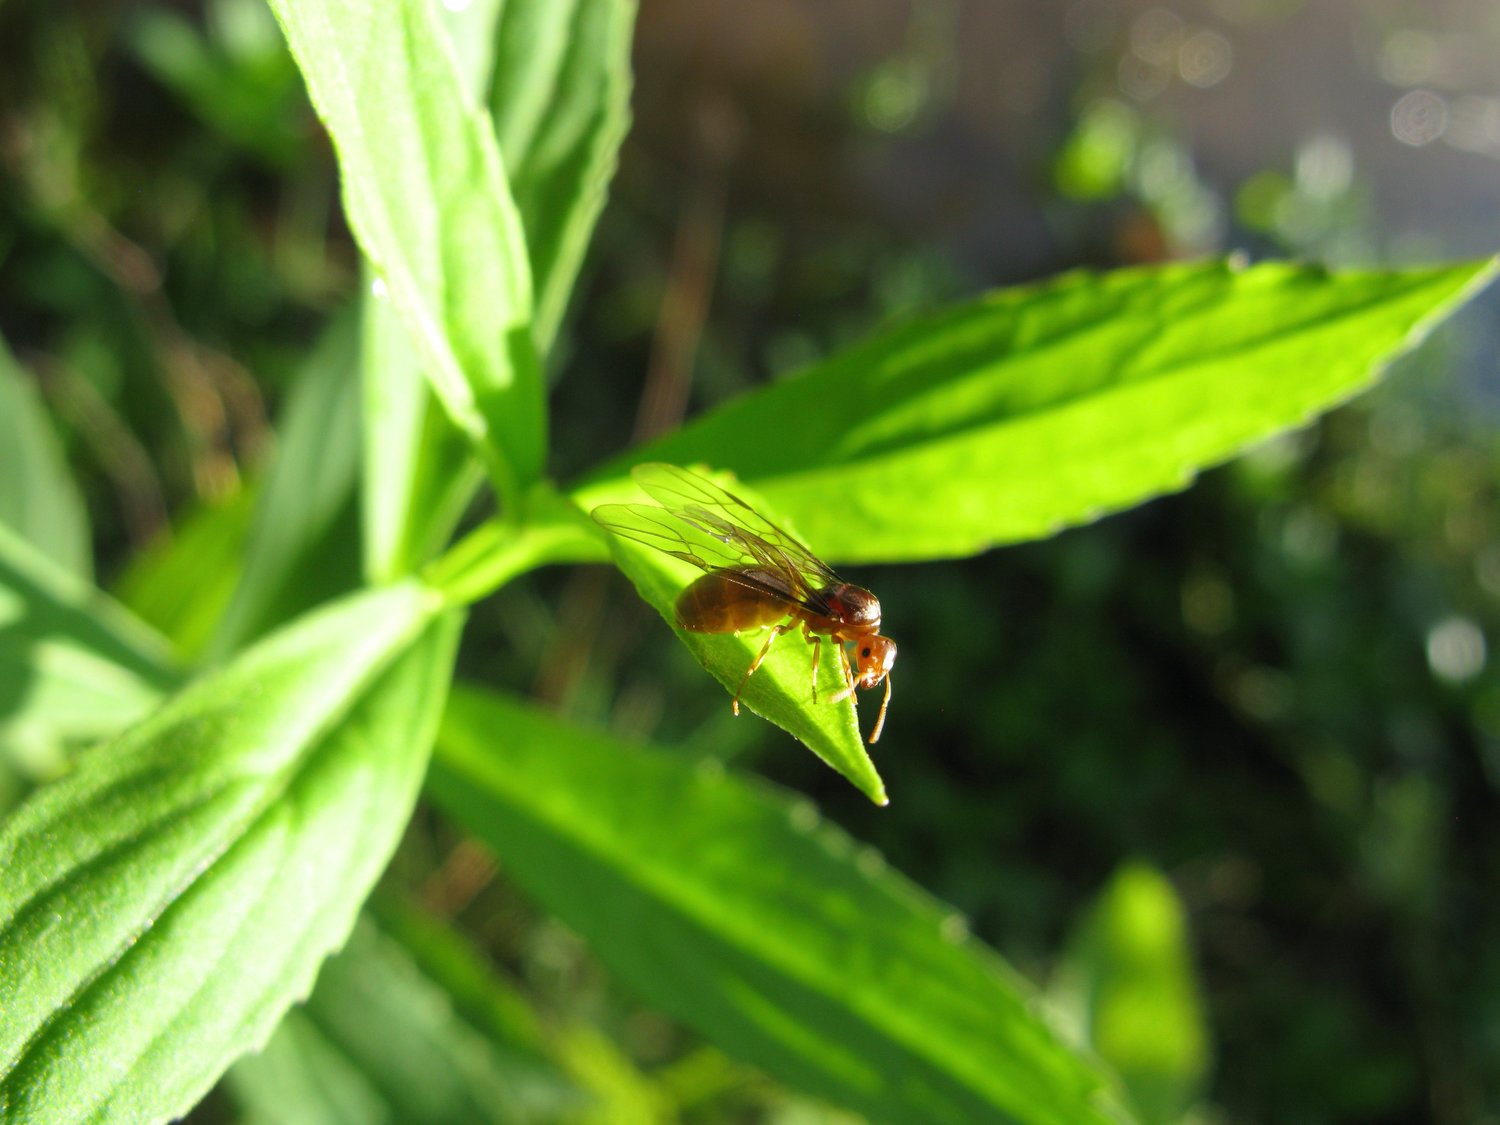 A cinnamon flying ant.